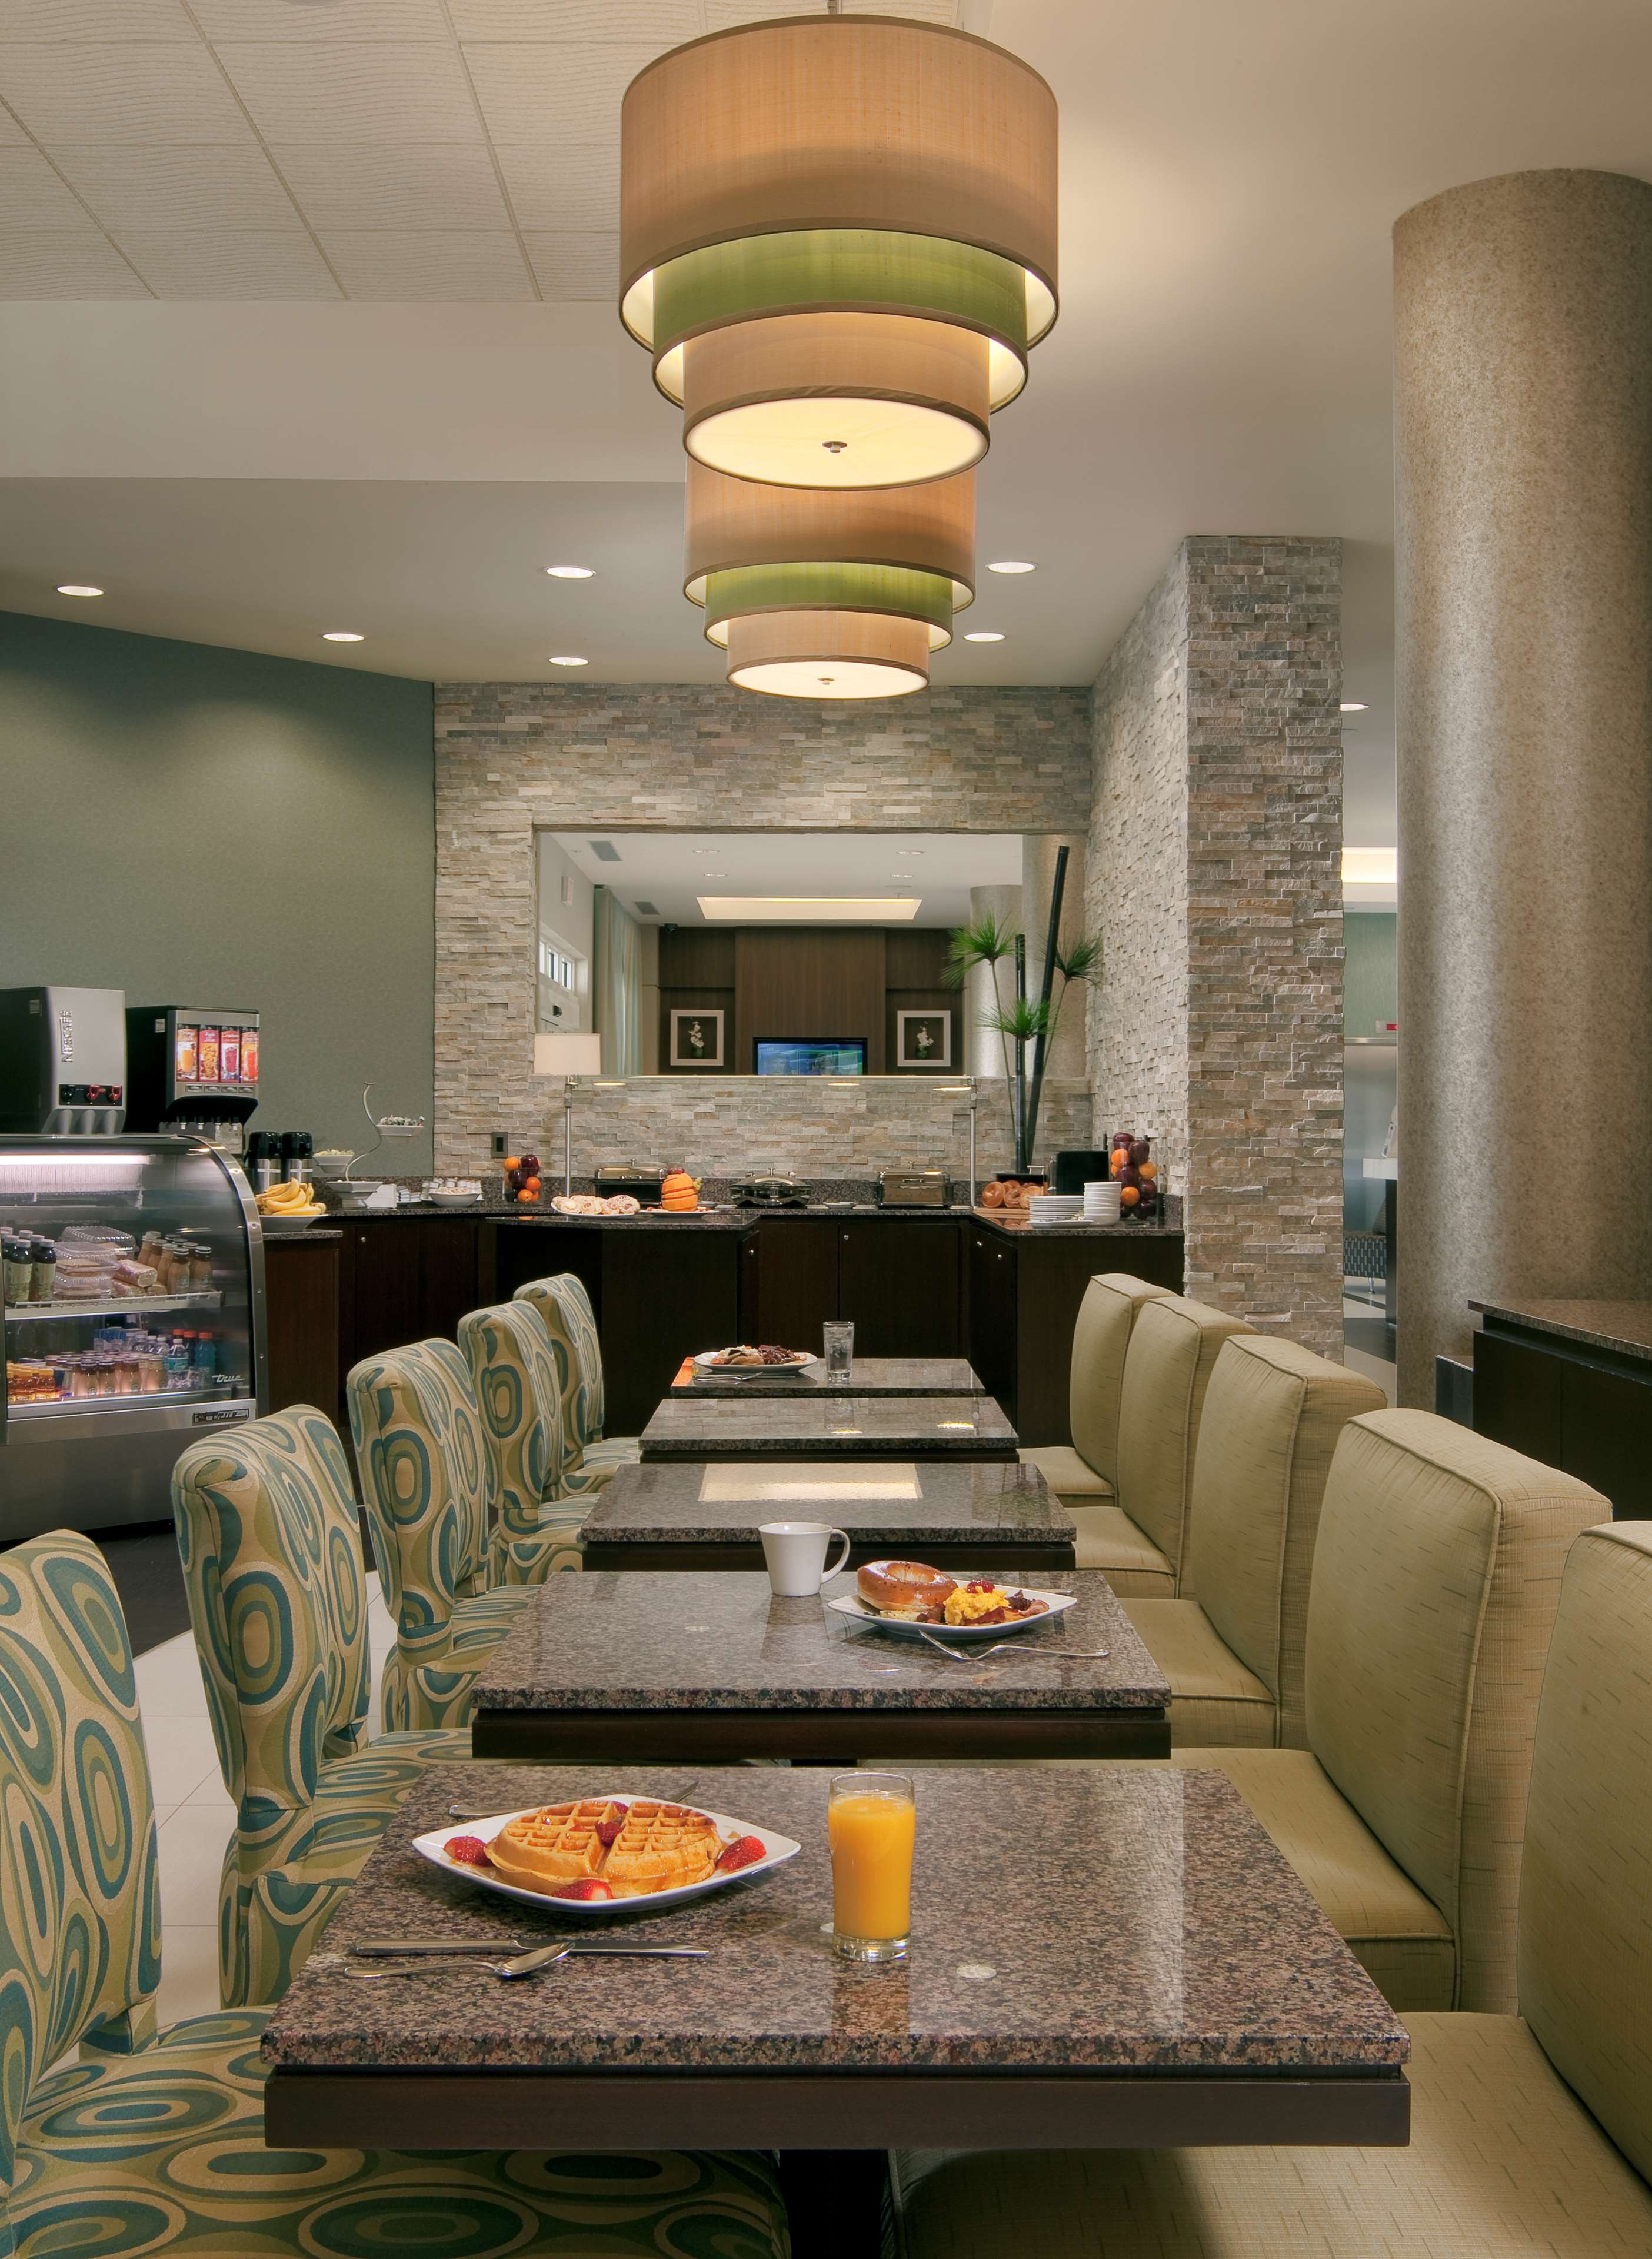 Best Western Premier Miami Intl Airport Hotel & Suites Coral Gables Photo